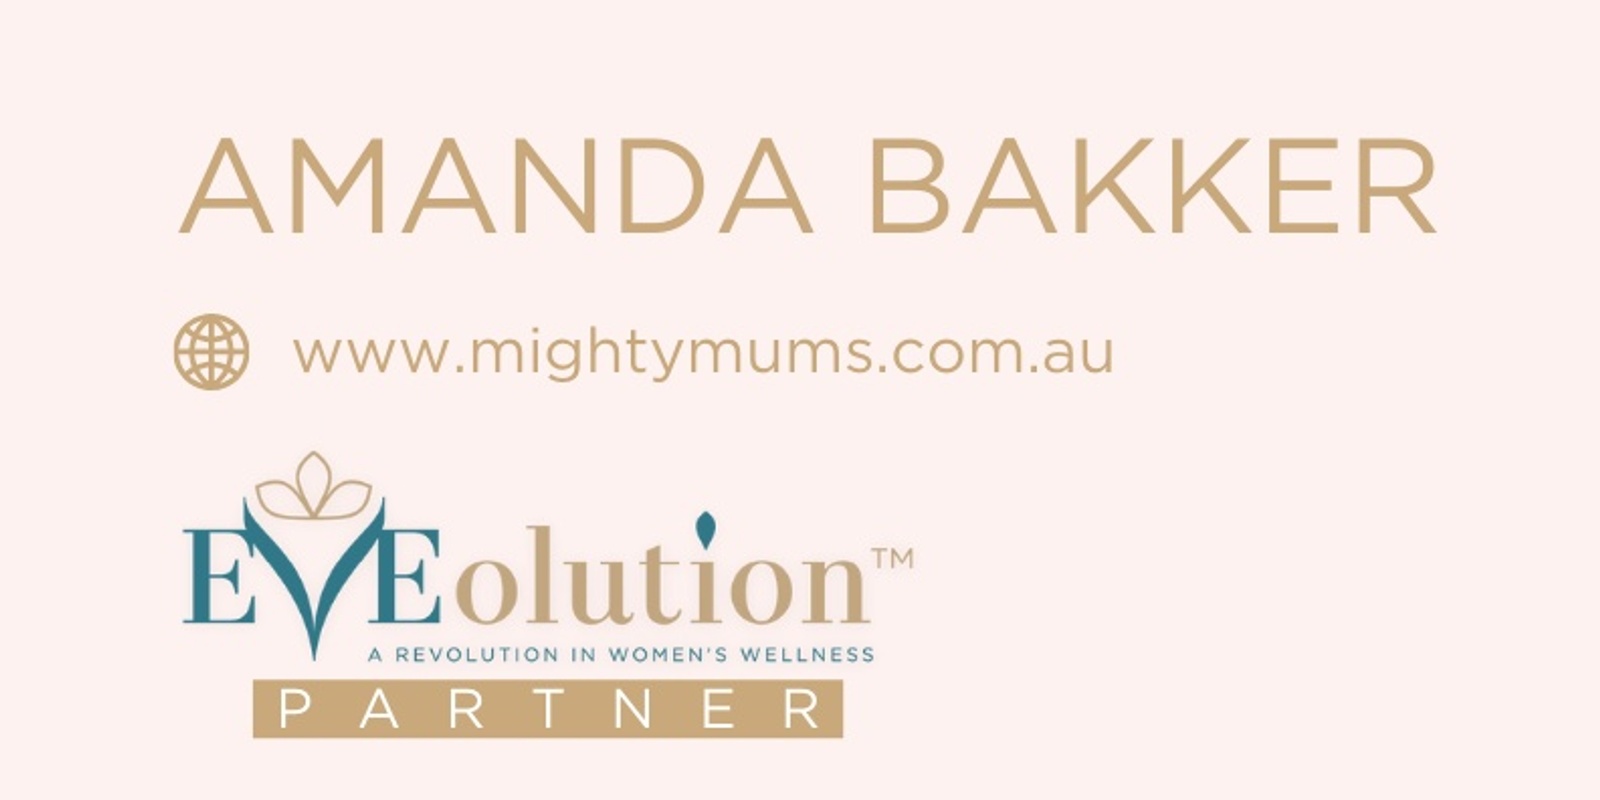 Amanda Bakker | Mighty Mums's banner